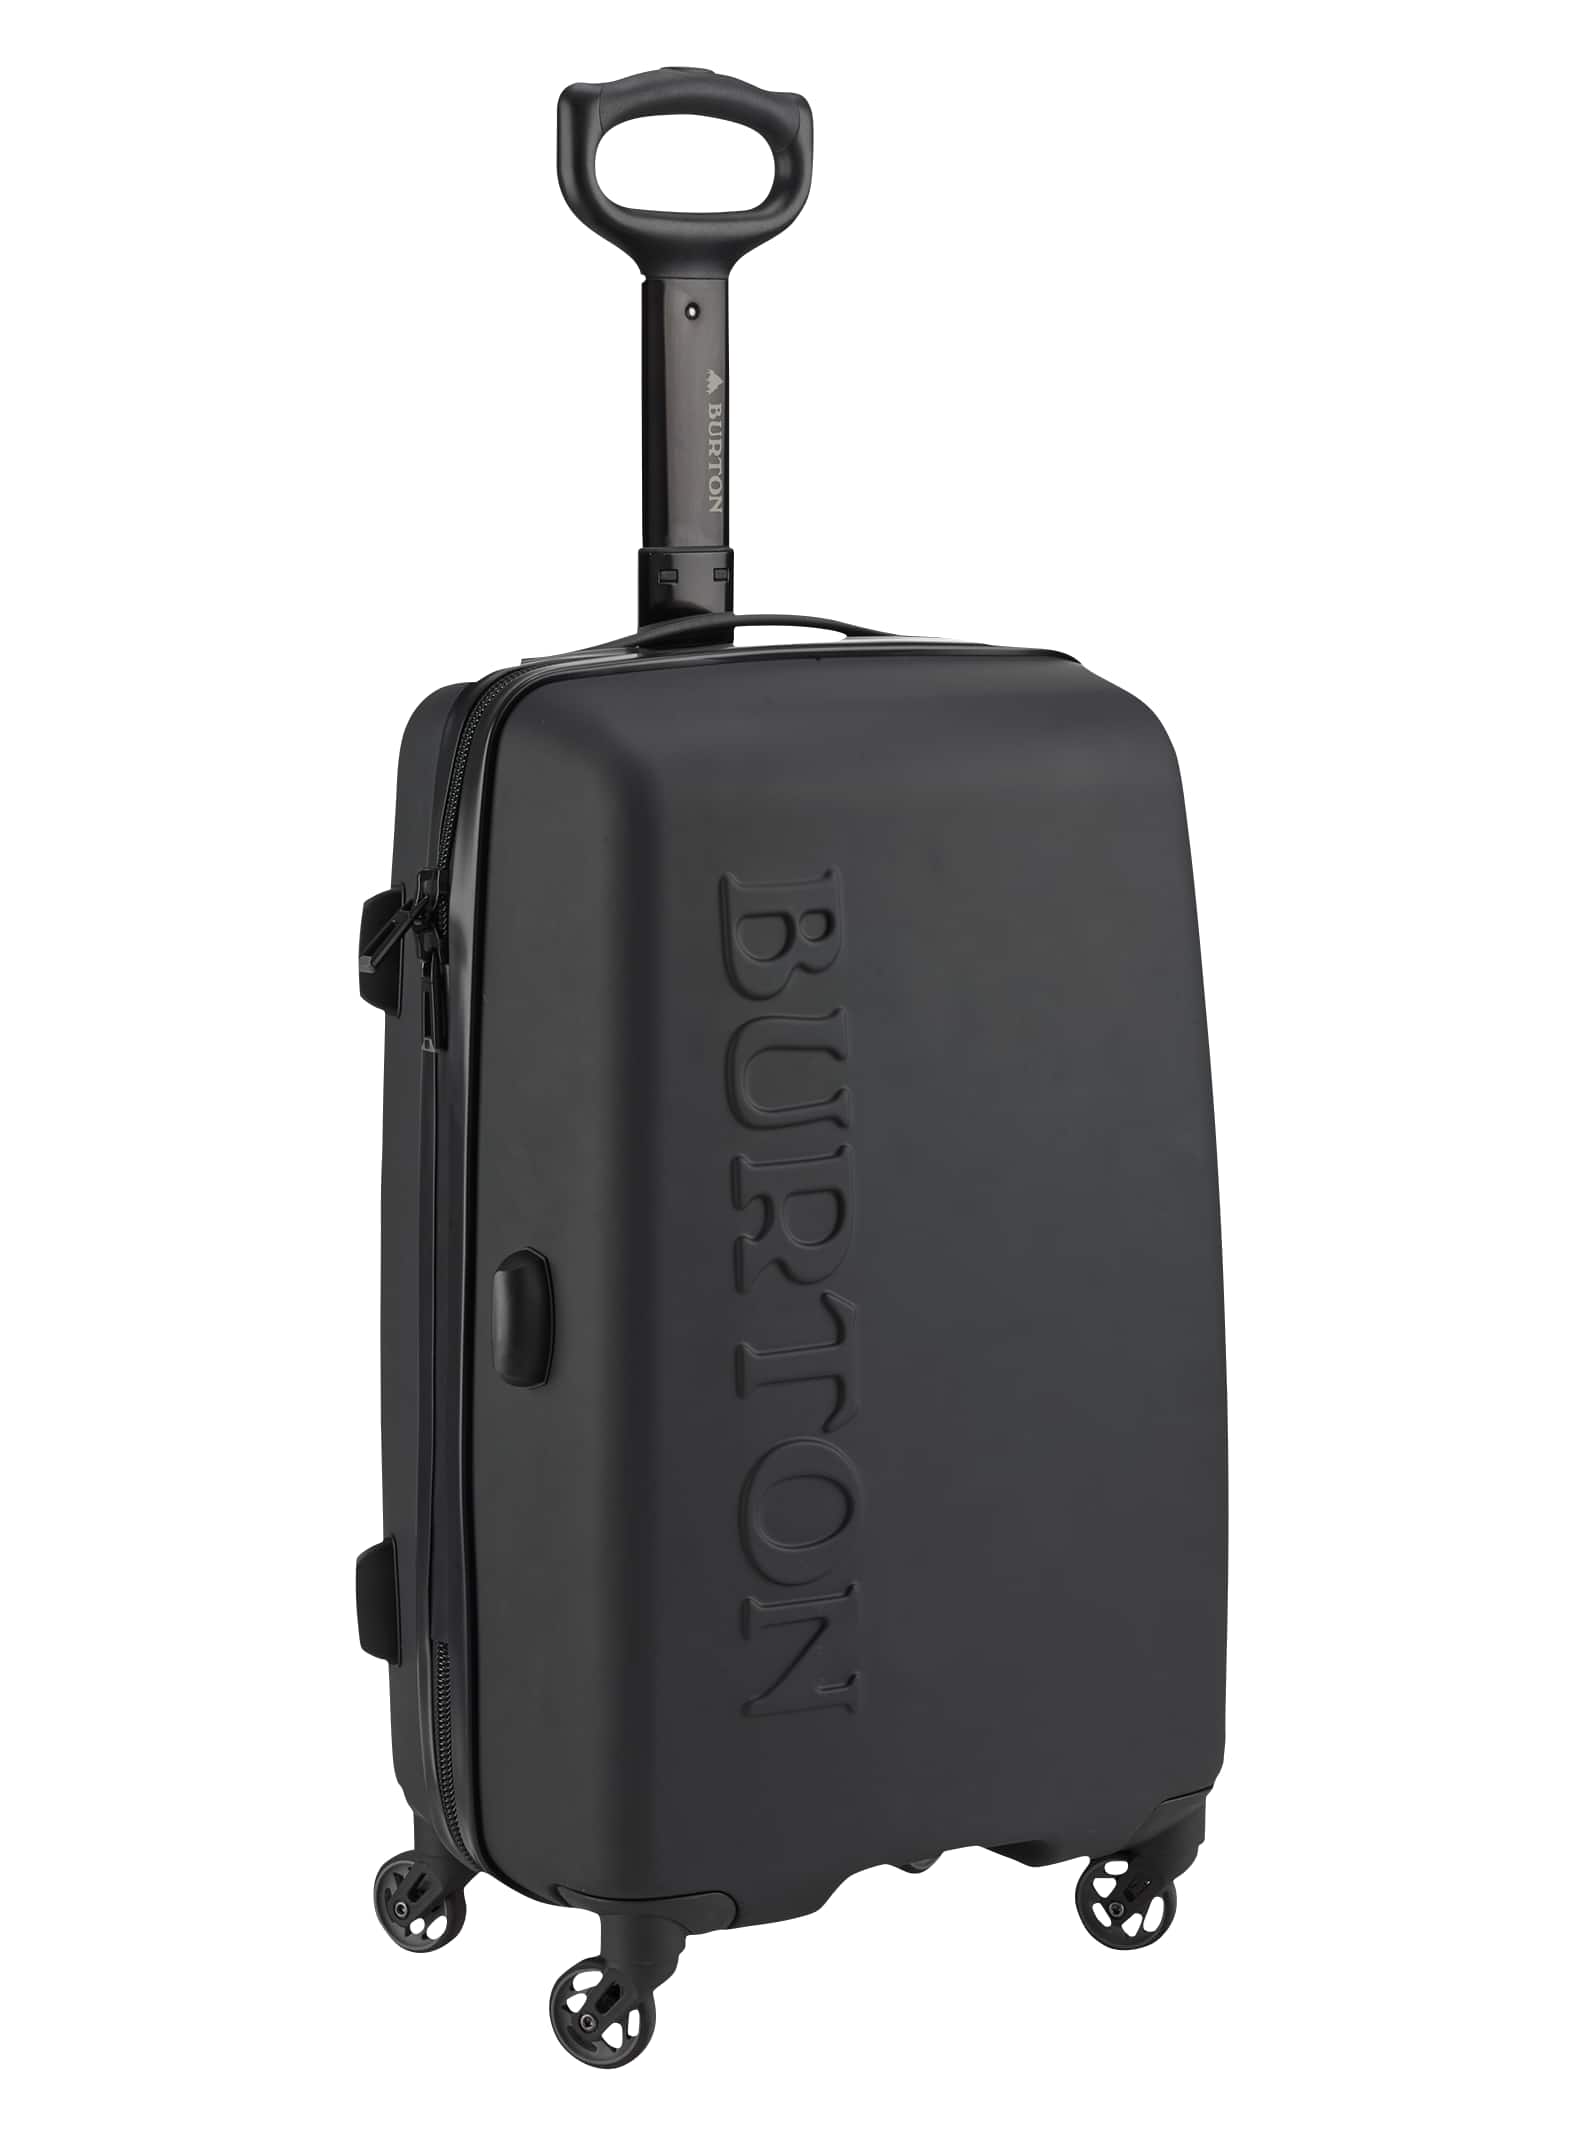 Burton / Air 25 Travel Bag